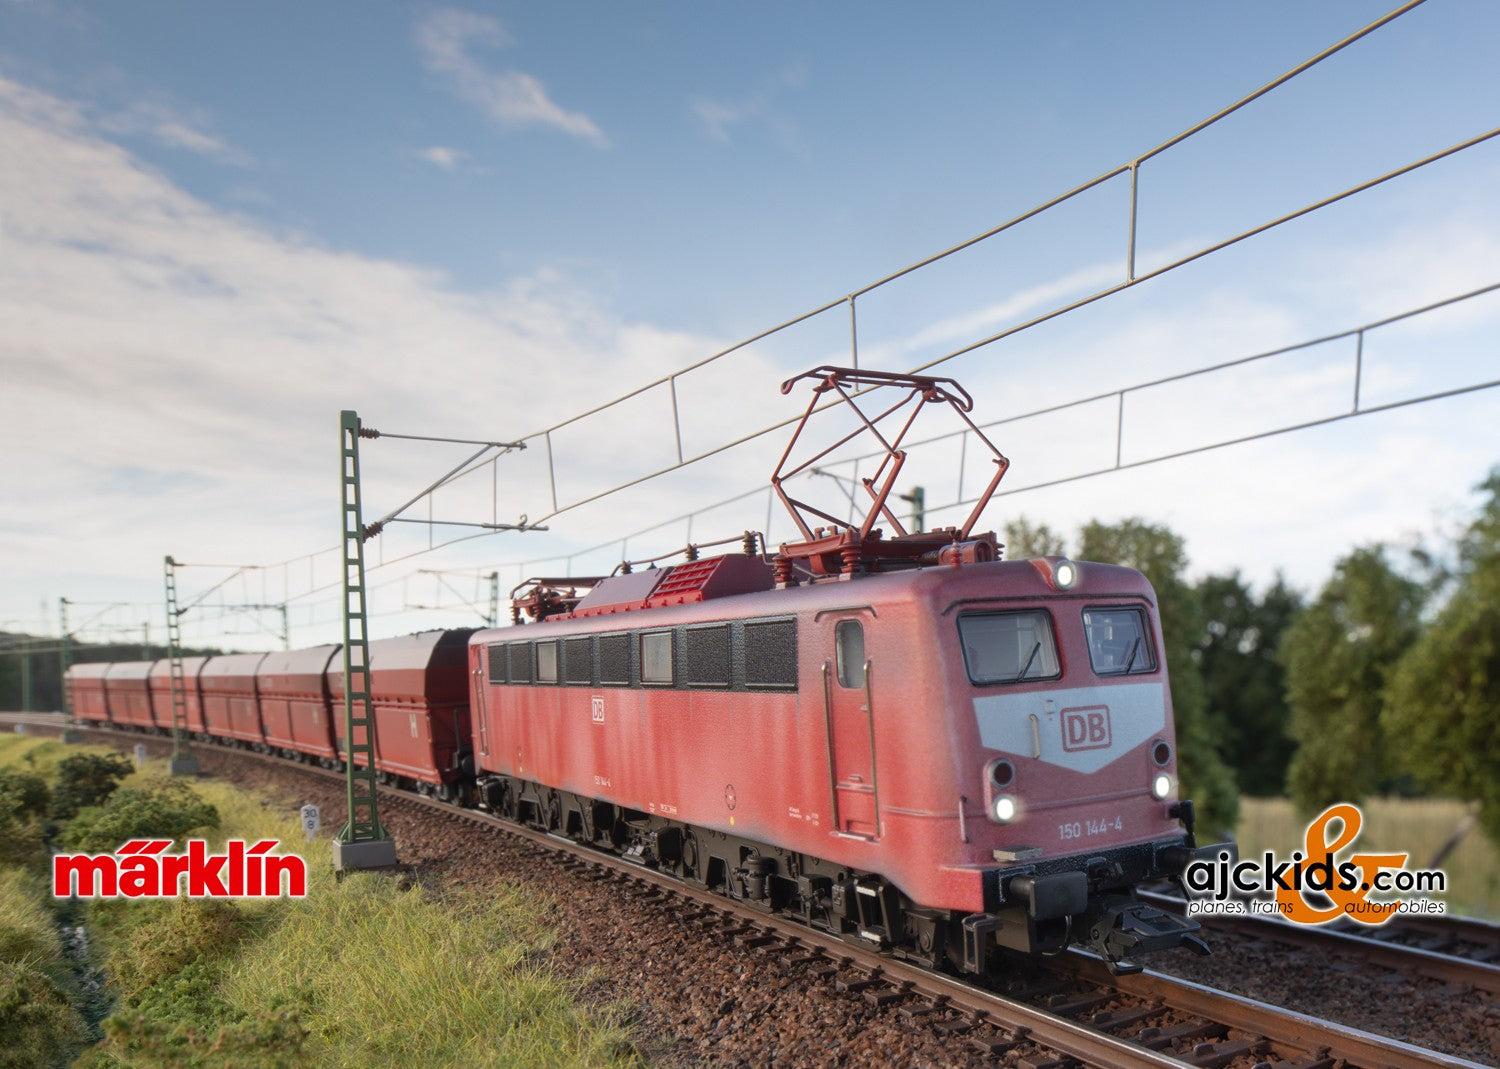 Marklin 37858 - Class 150 Electric Locomotive at Ajckids.com